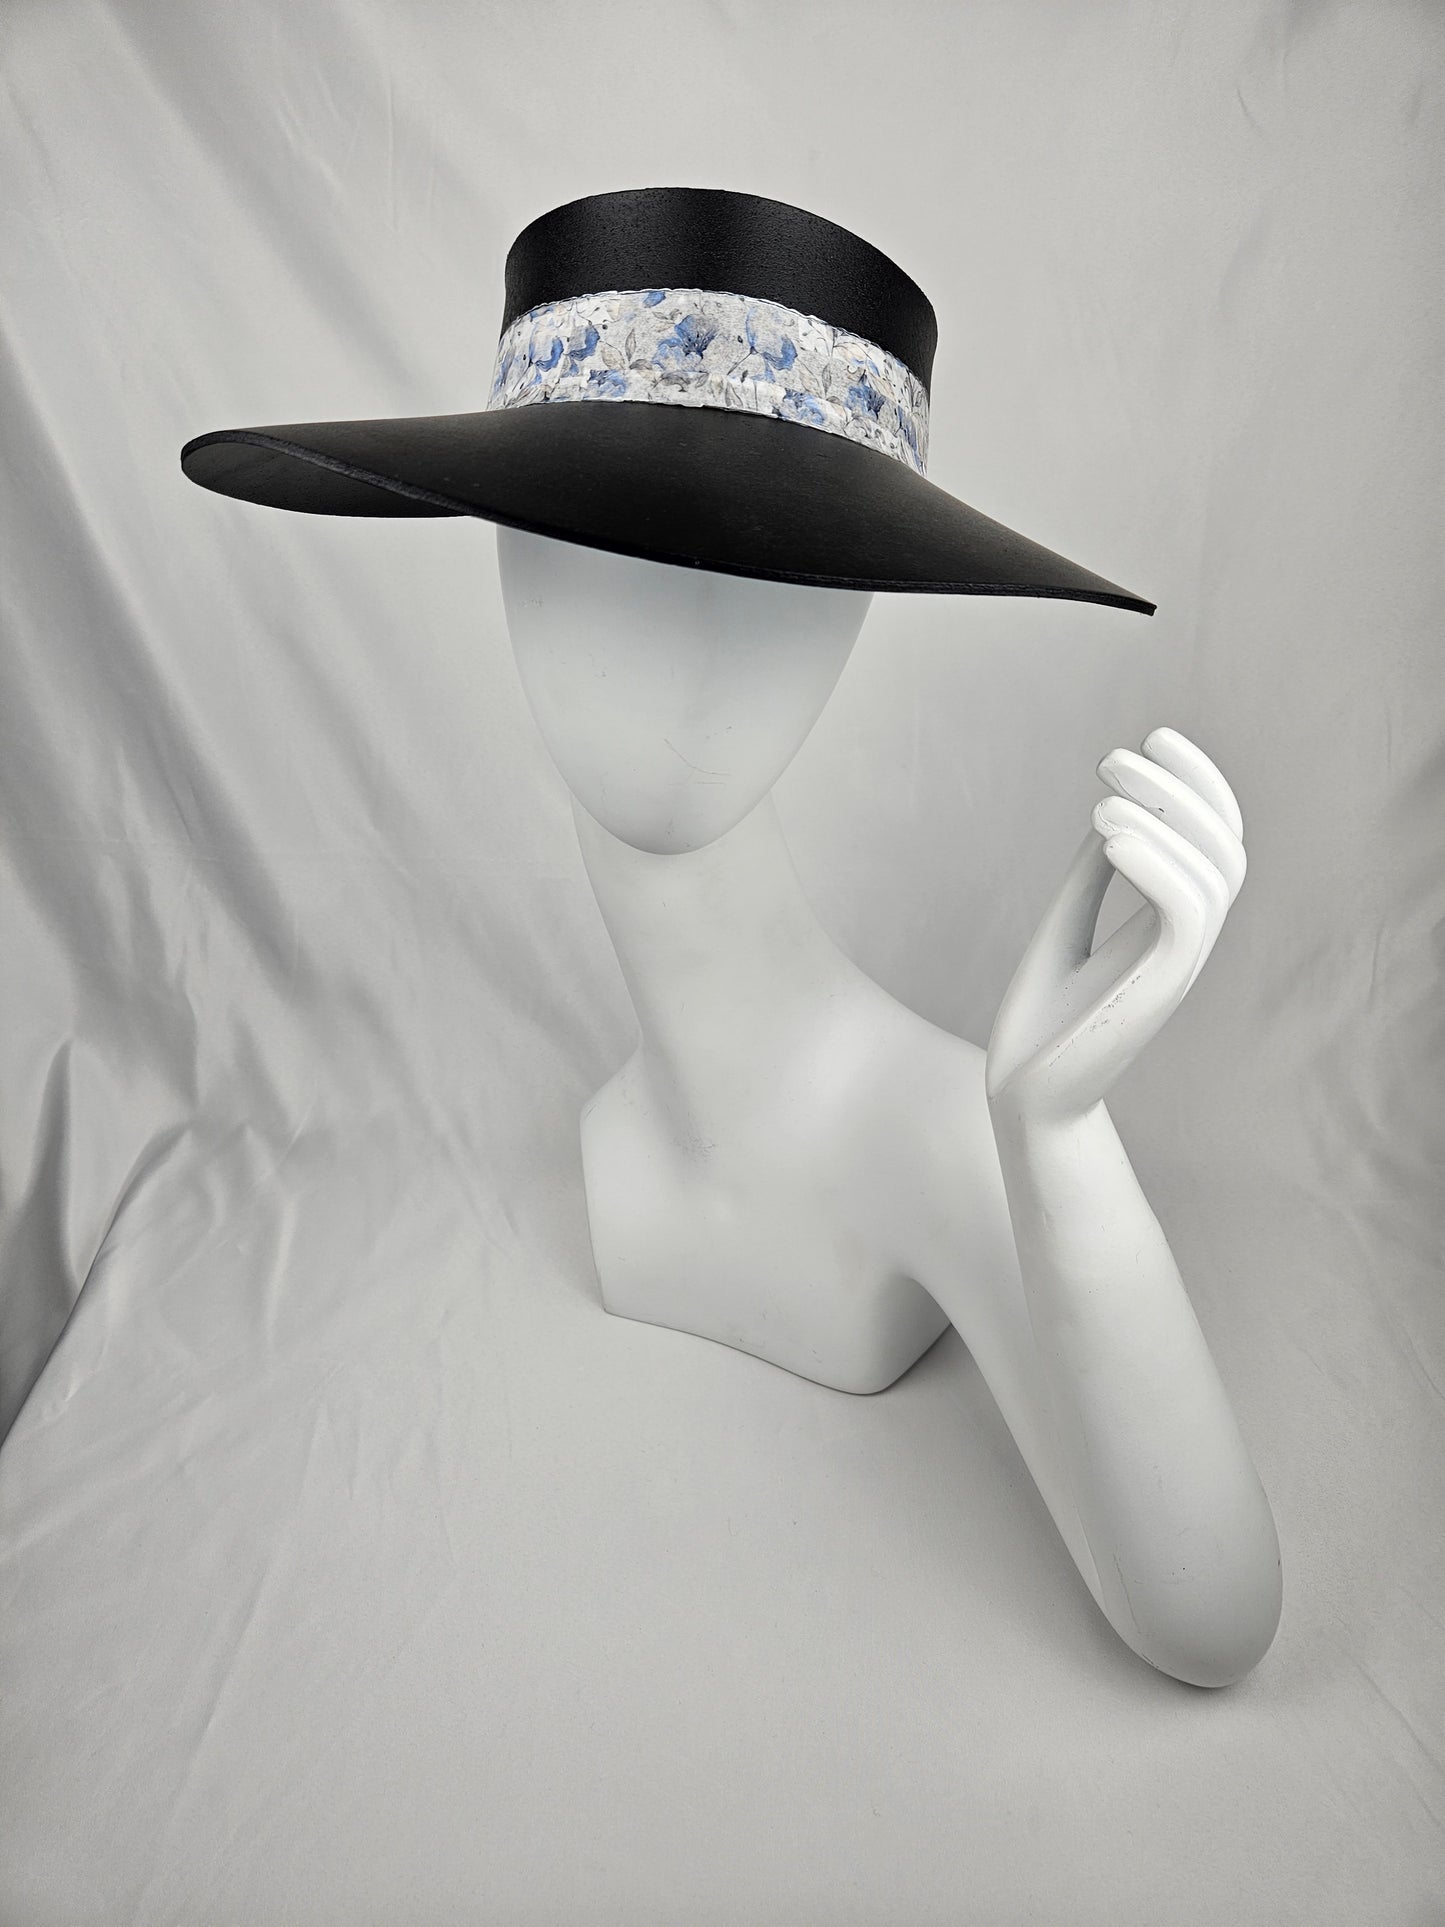 Tall Timeless Black Audrey Foam Sun Visor Hat with Pale Blue Floral Band: 1920s, Big Brim, Swim, Pool, UV Resistant, No Headache